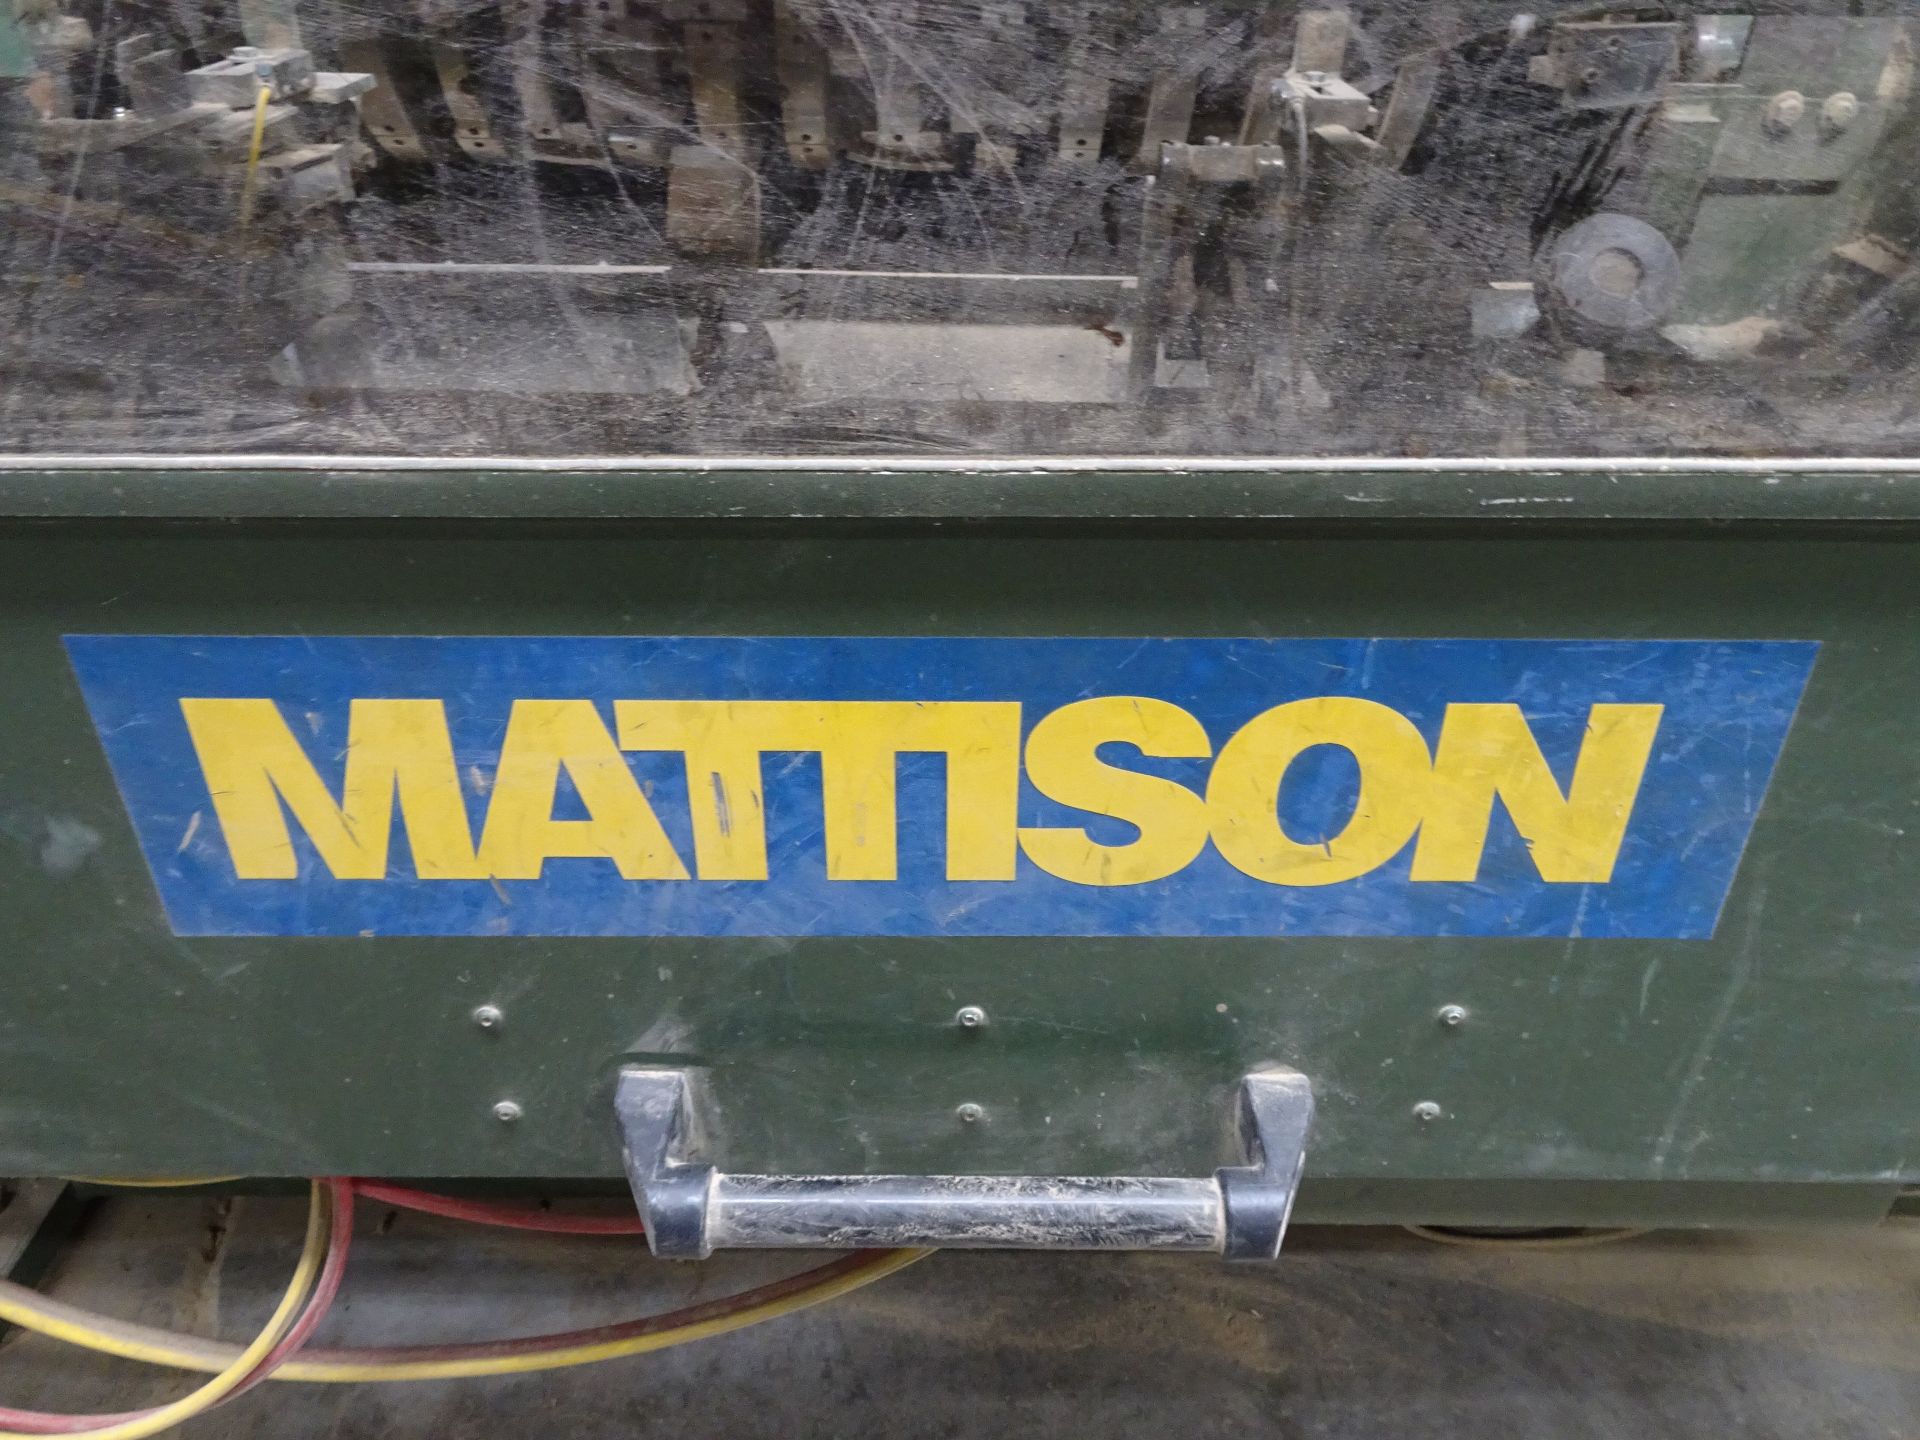 Mattison 25 HP Rotary Lathe - Image 2 of 6